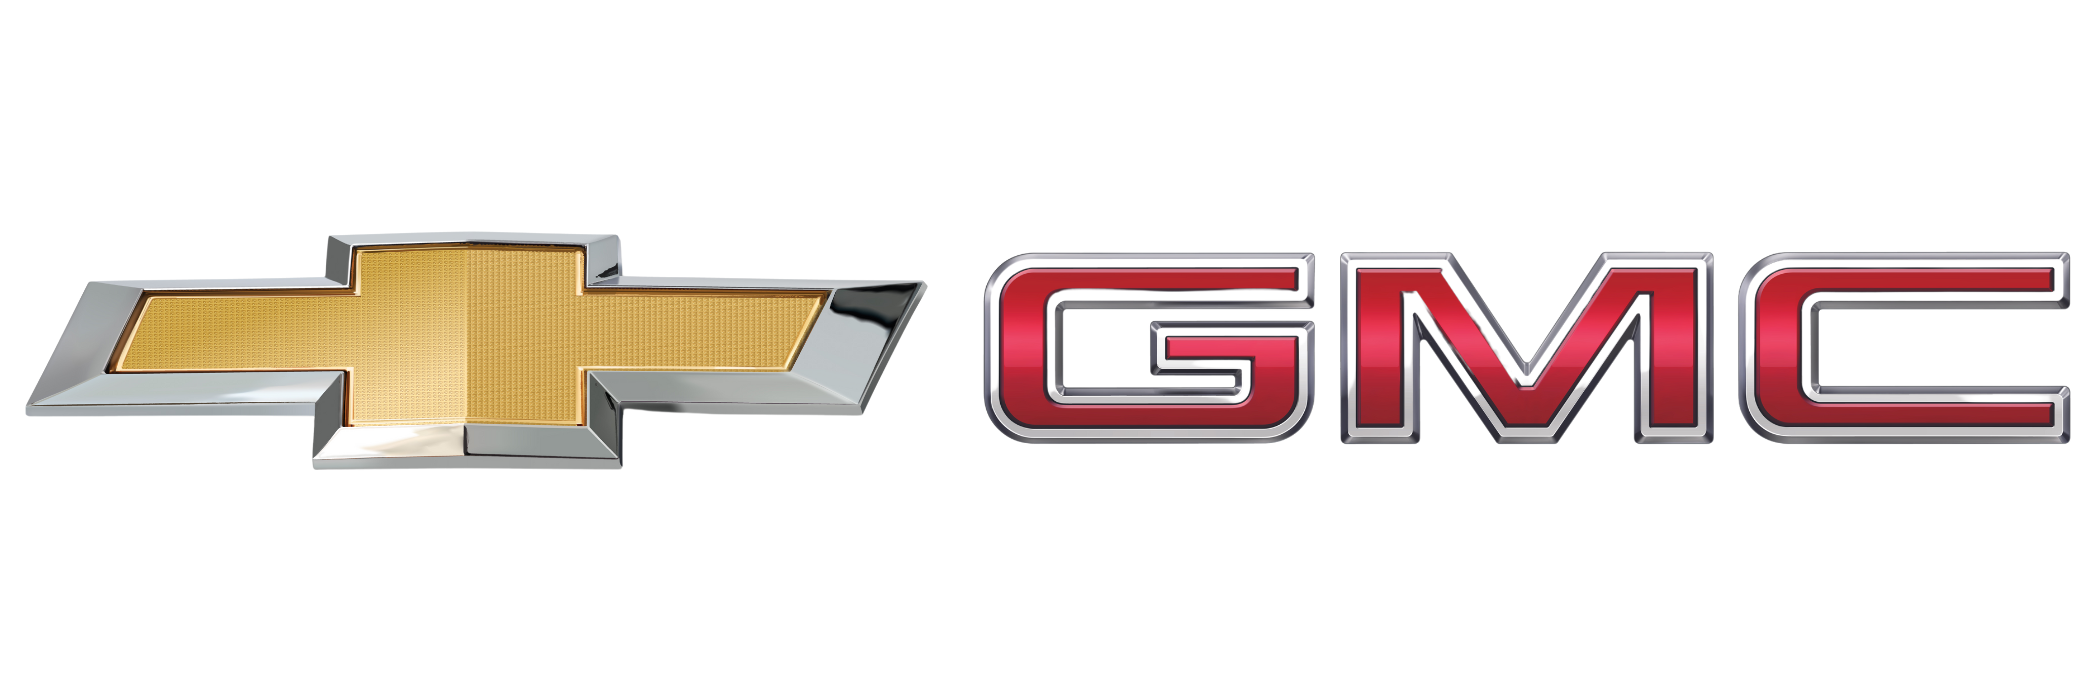 Patriot Chevrolet GMC of Ardmore-oem_logo